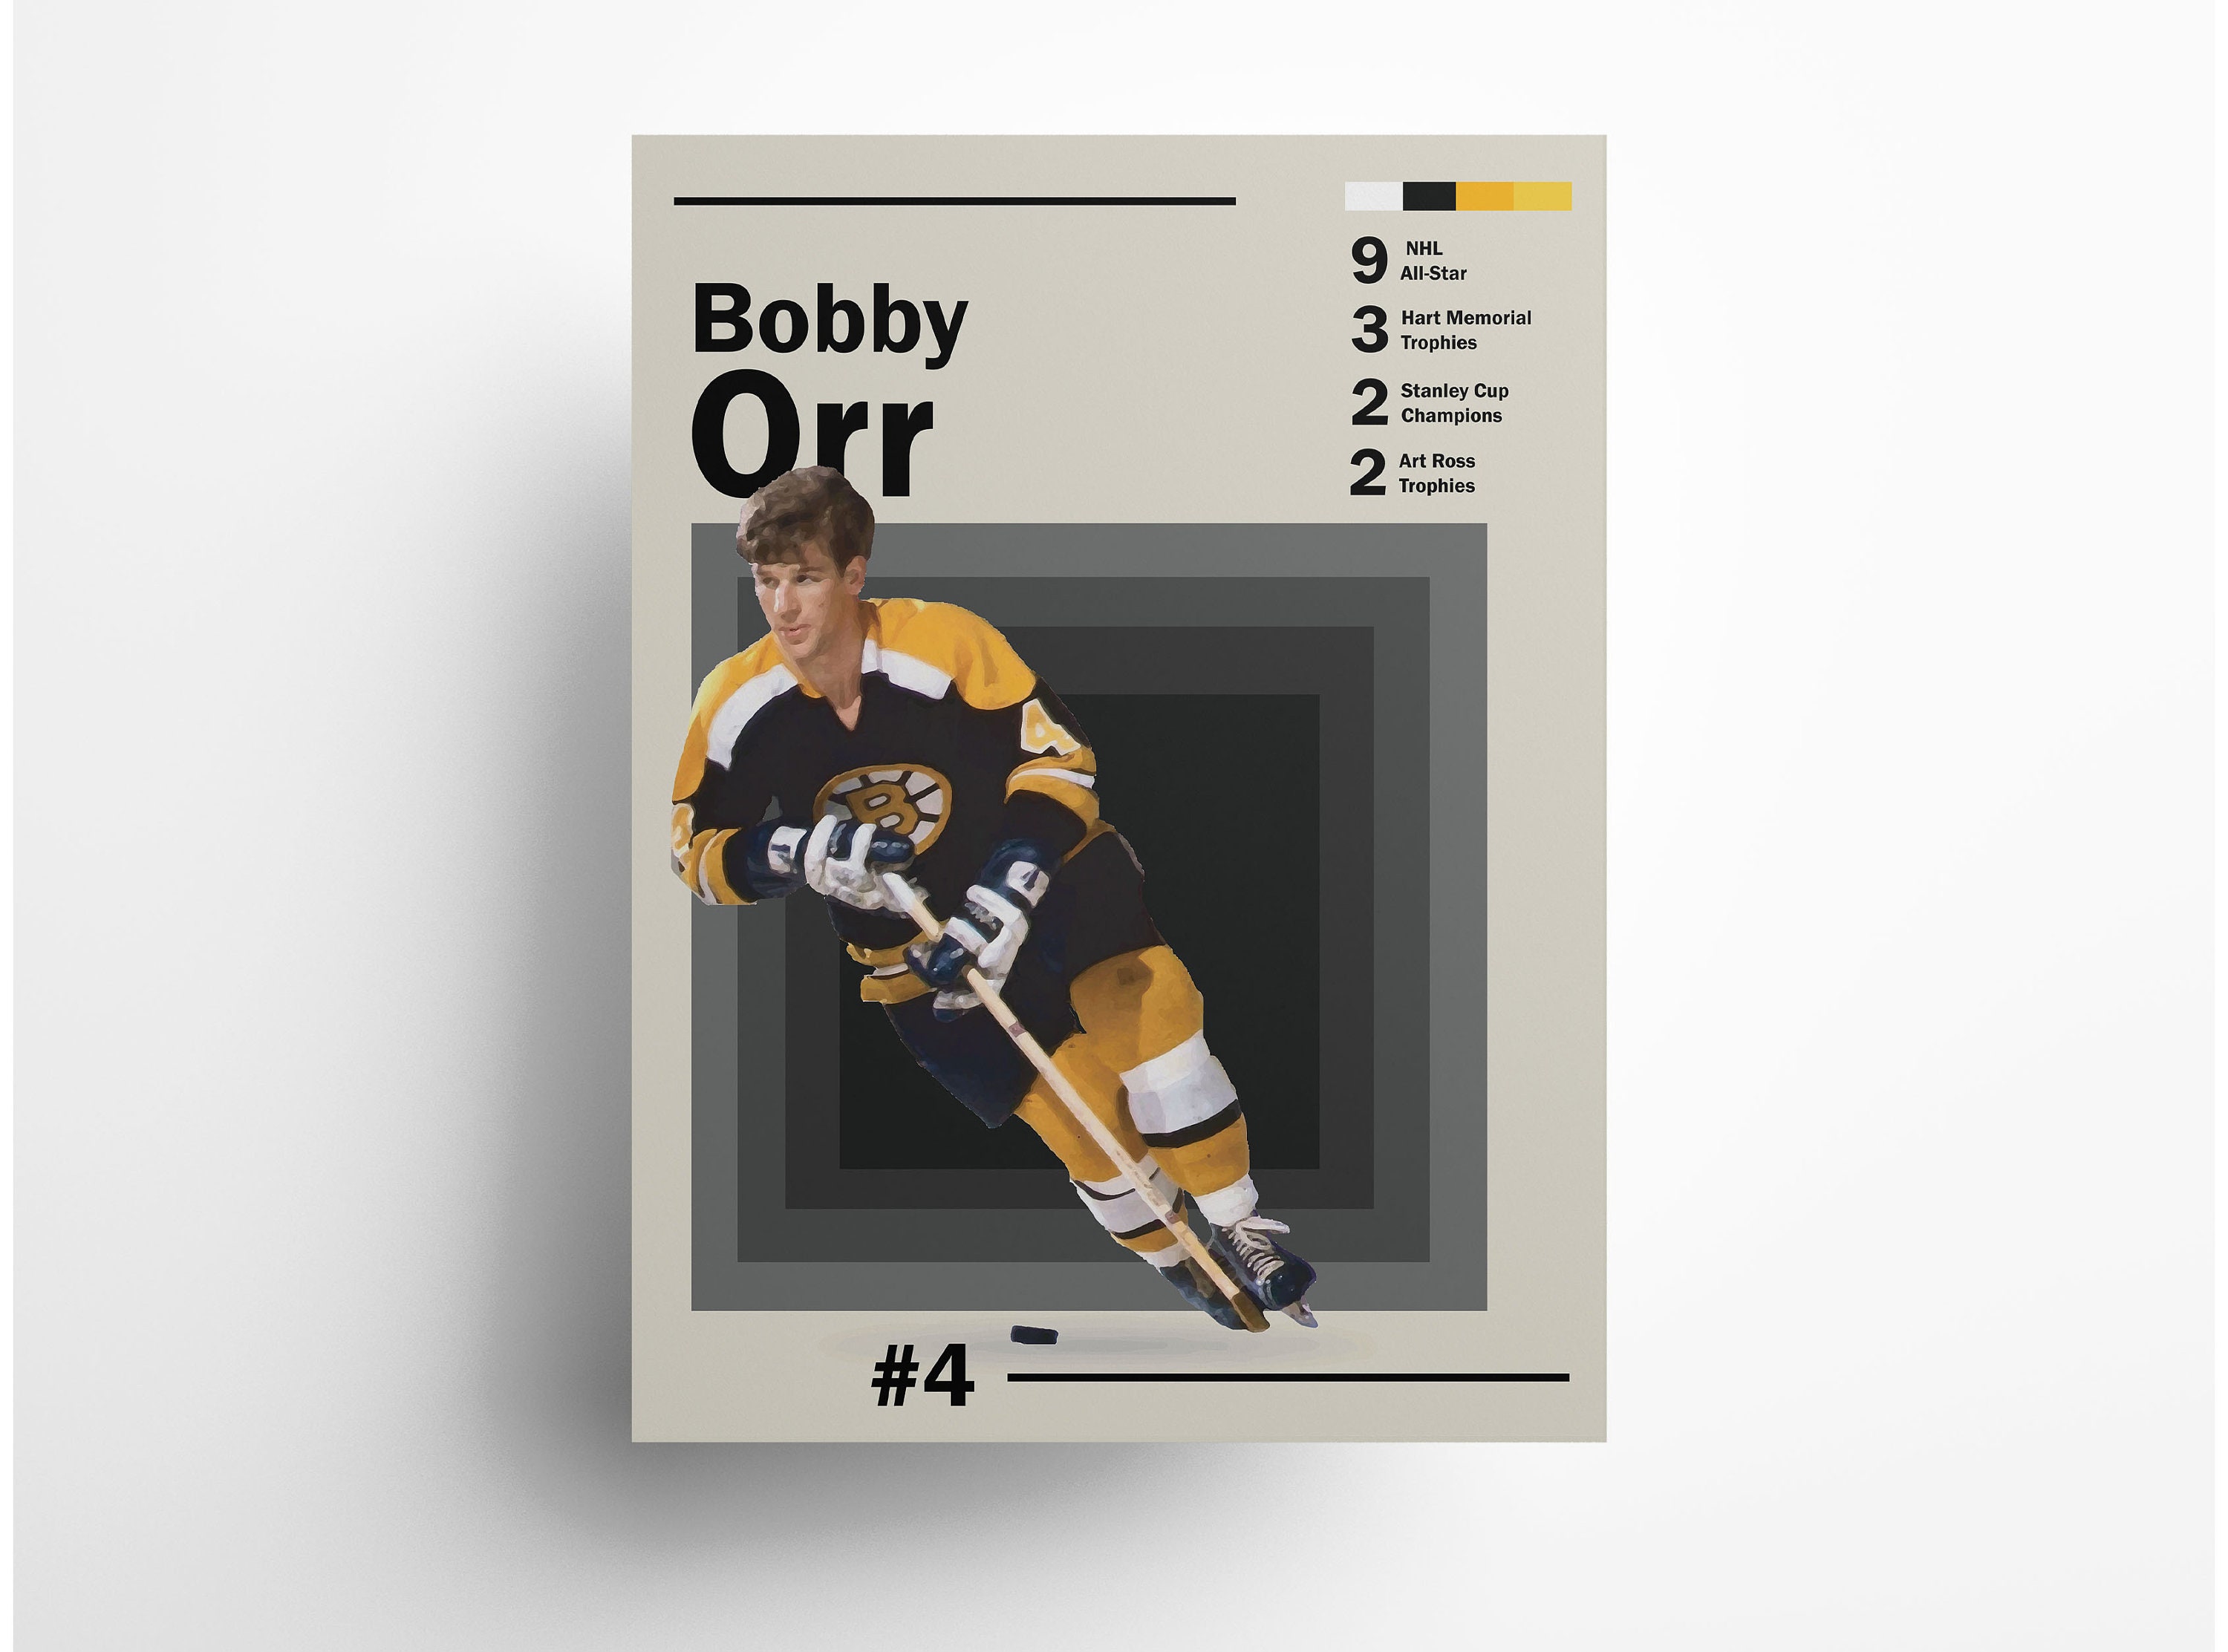 Bobby Orr Signed Bruins Bicentennial Throwback Jersey (Orr)